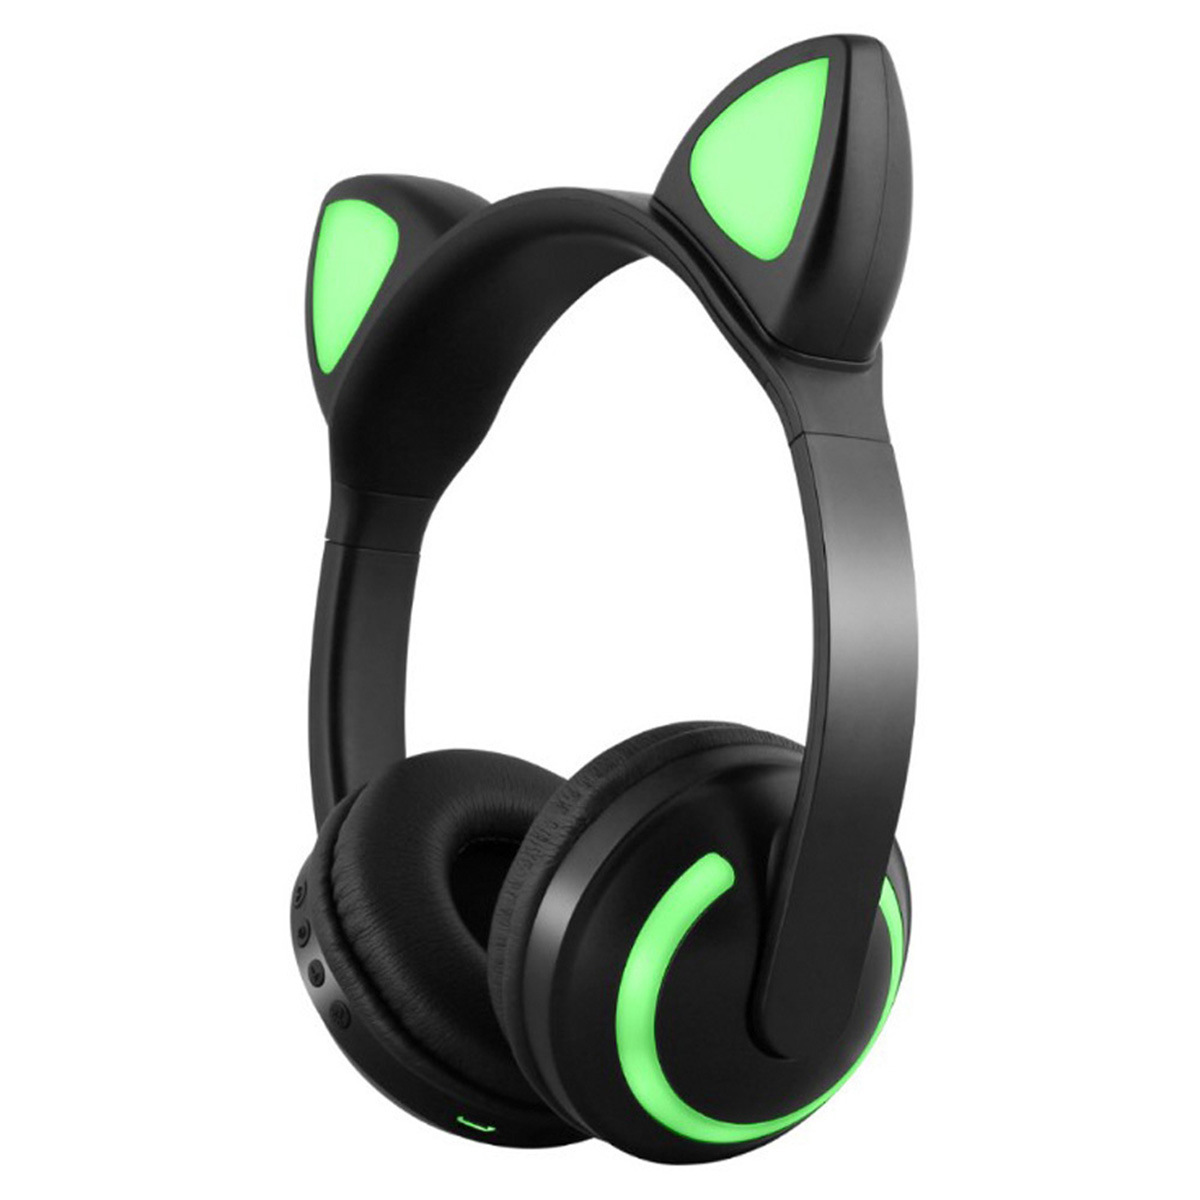 Head-mounted Wireless Cat Ear Luminous Headset Mobile Phone Computer Universal Bluetooth Headset